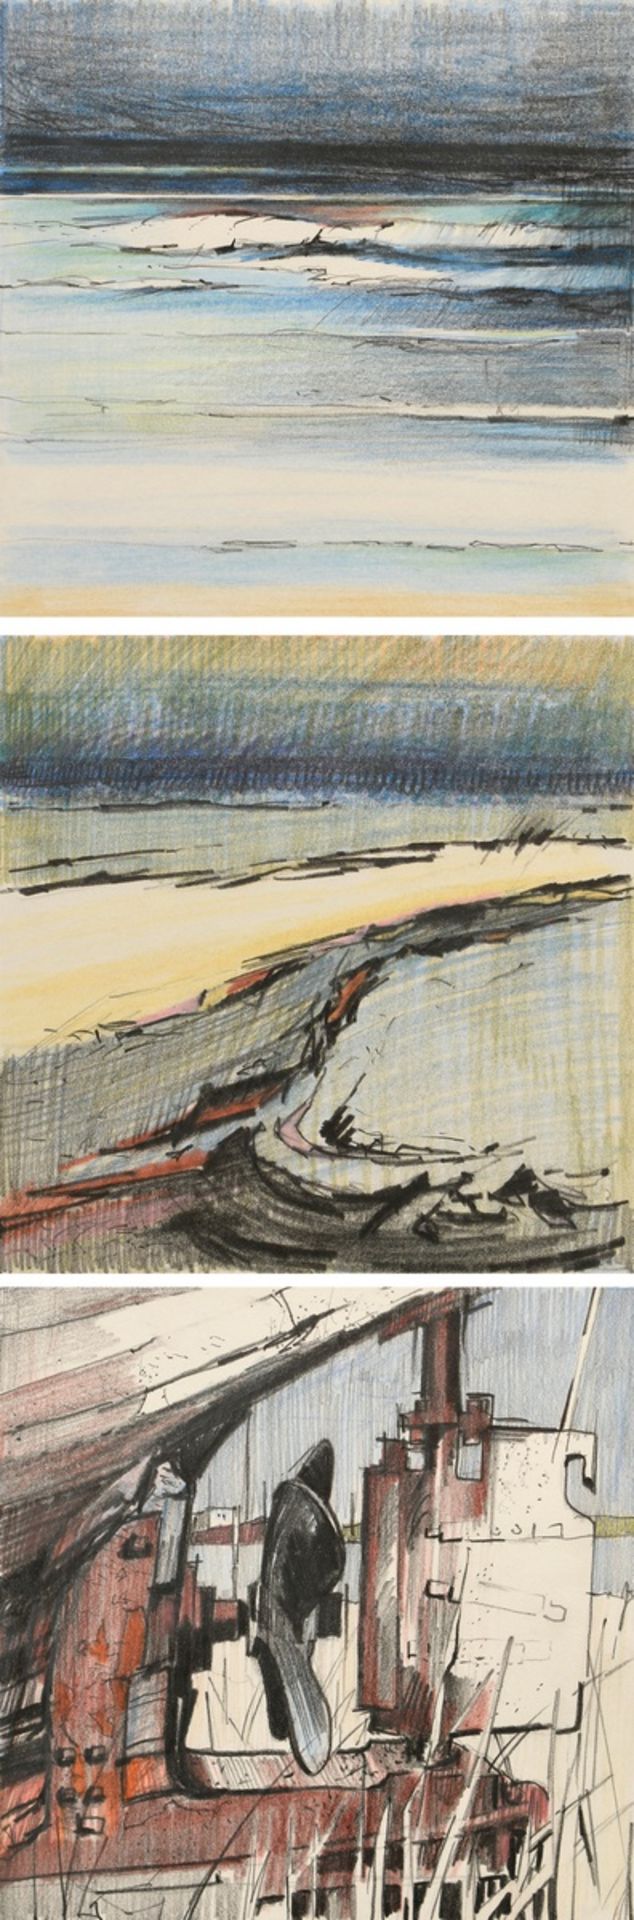 3 Tegtmeier, Claus (*1946) "Sand stripes", High and Dry" and "Night flood", pencil/coloured pencil,